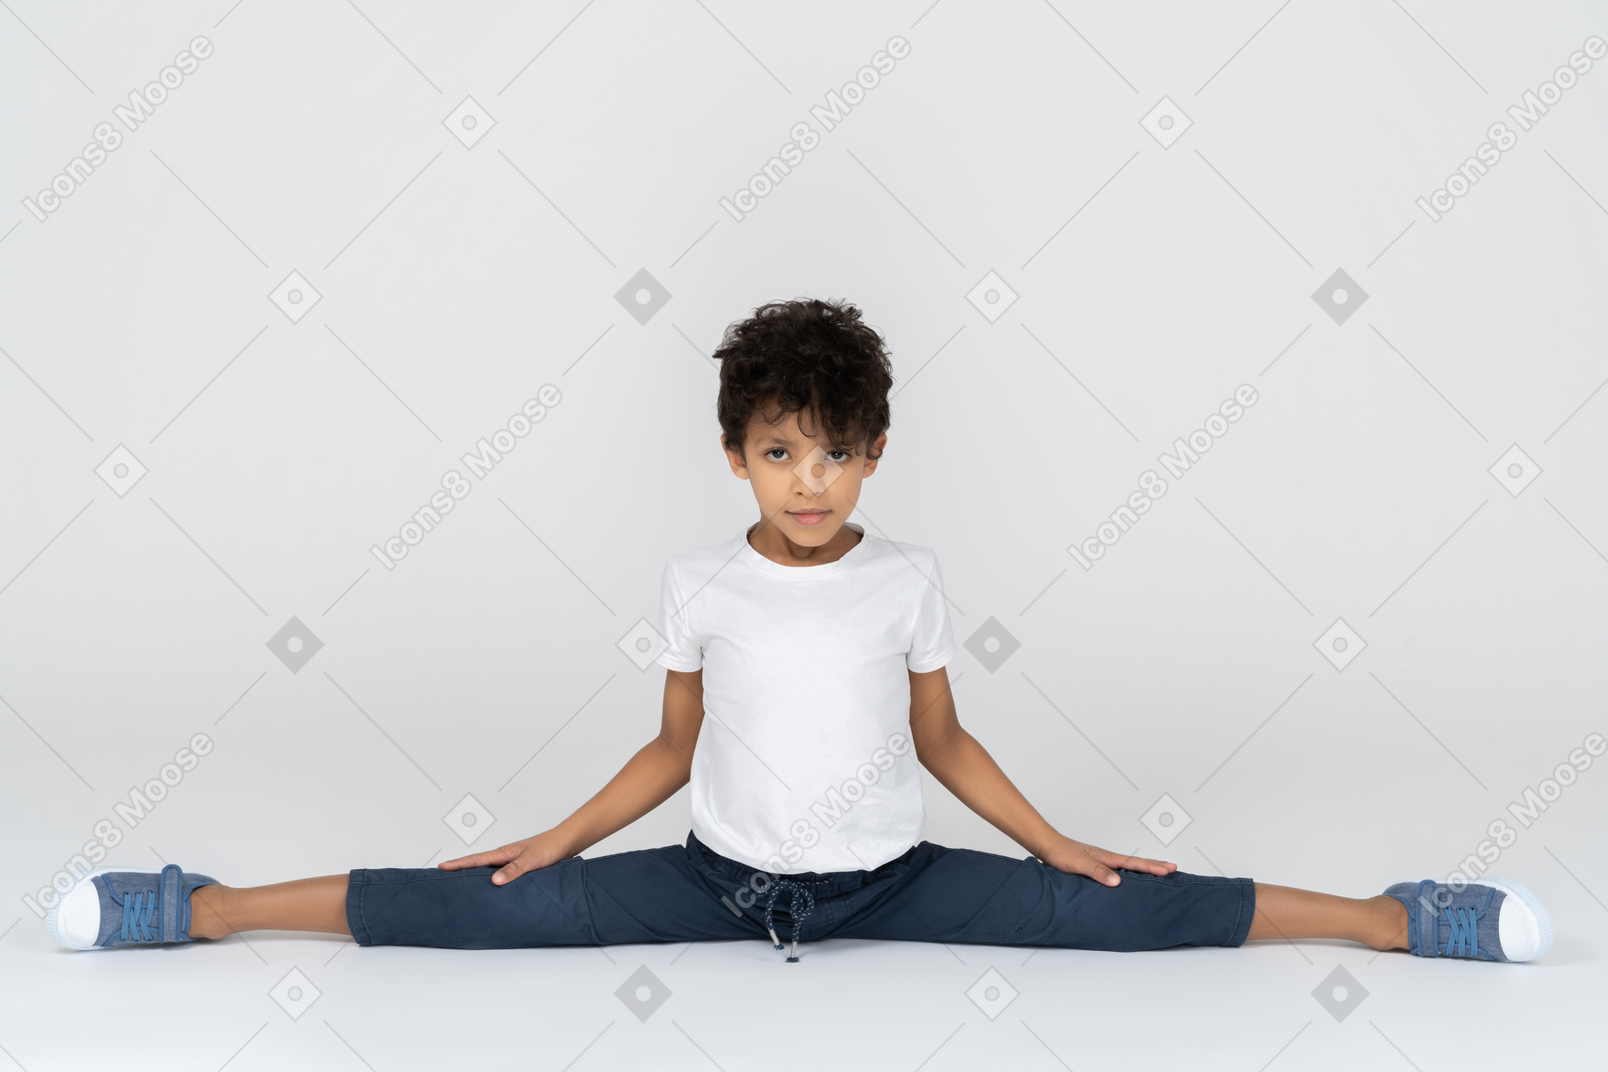 Un garçon faisant de l'exercice fractionné